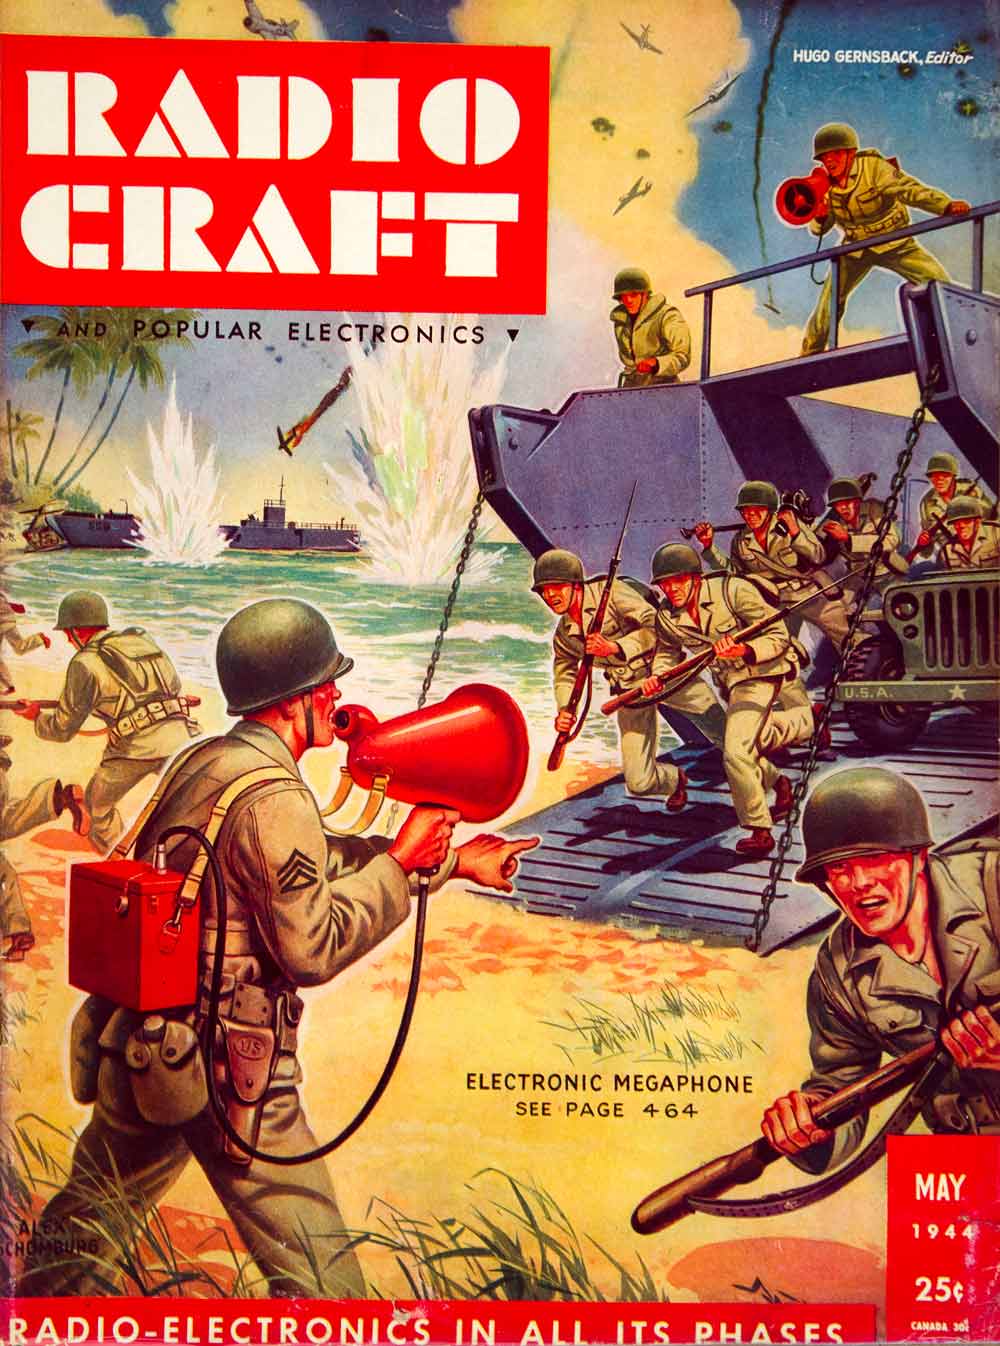 1944 Cover Radio Craft Popular Electronics Megaphone Navy World War II YRC2